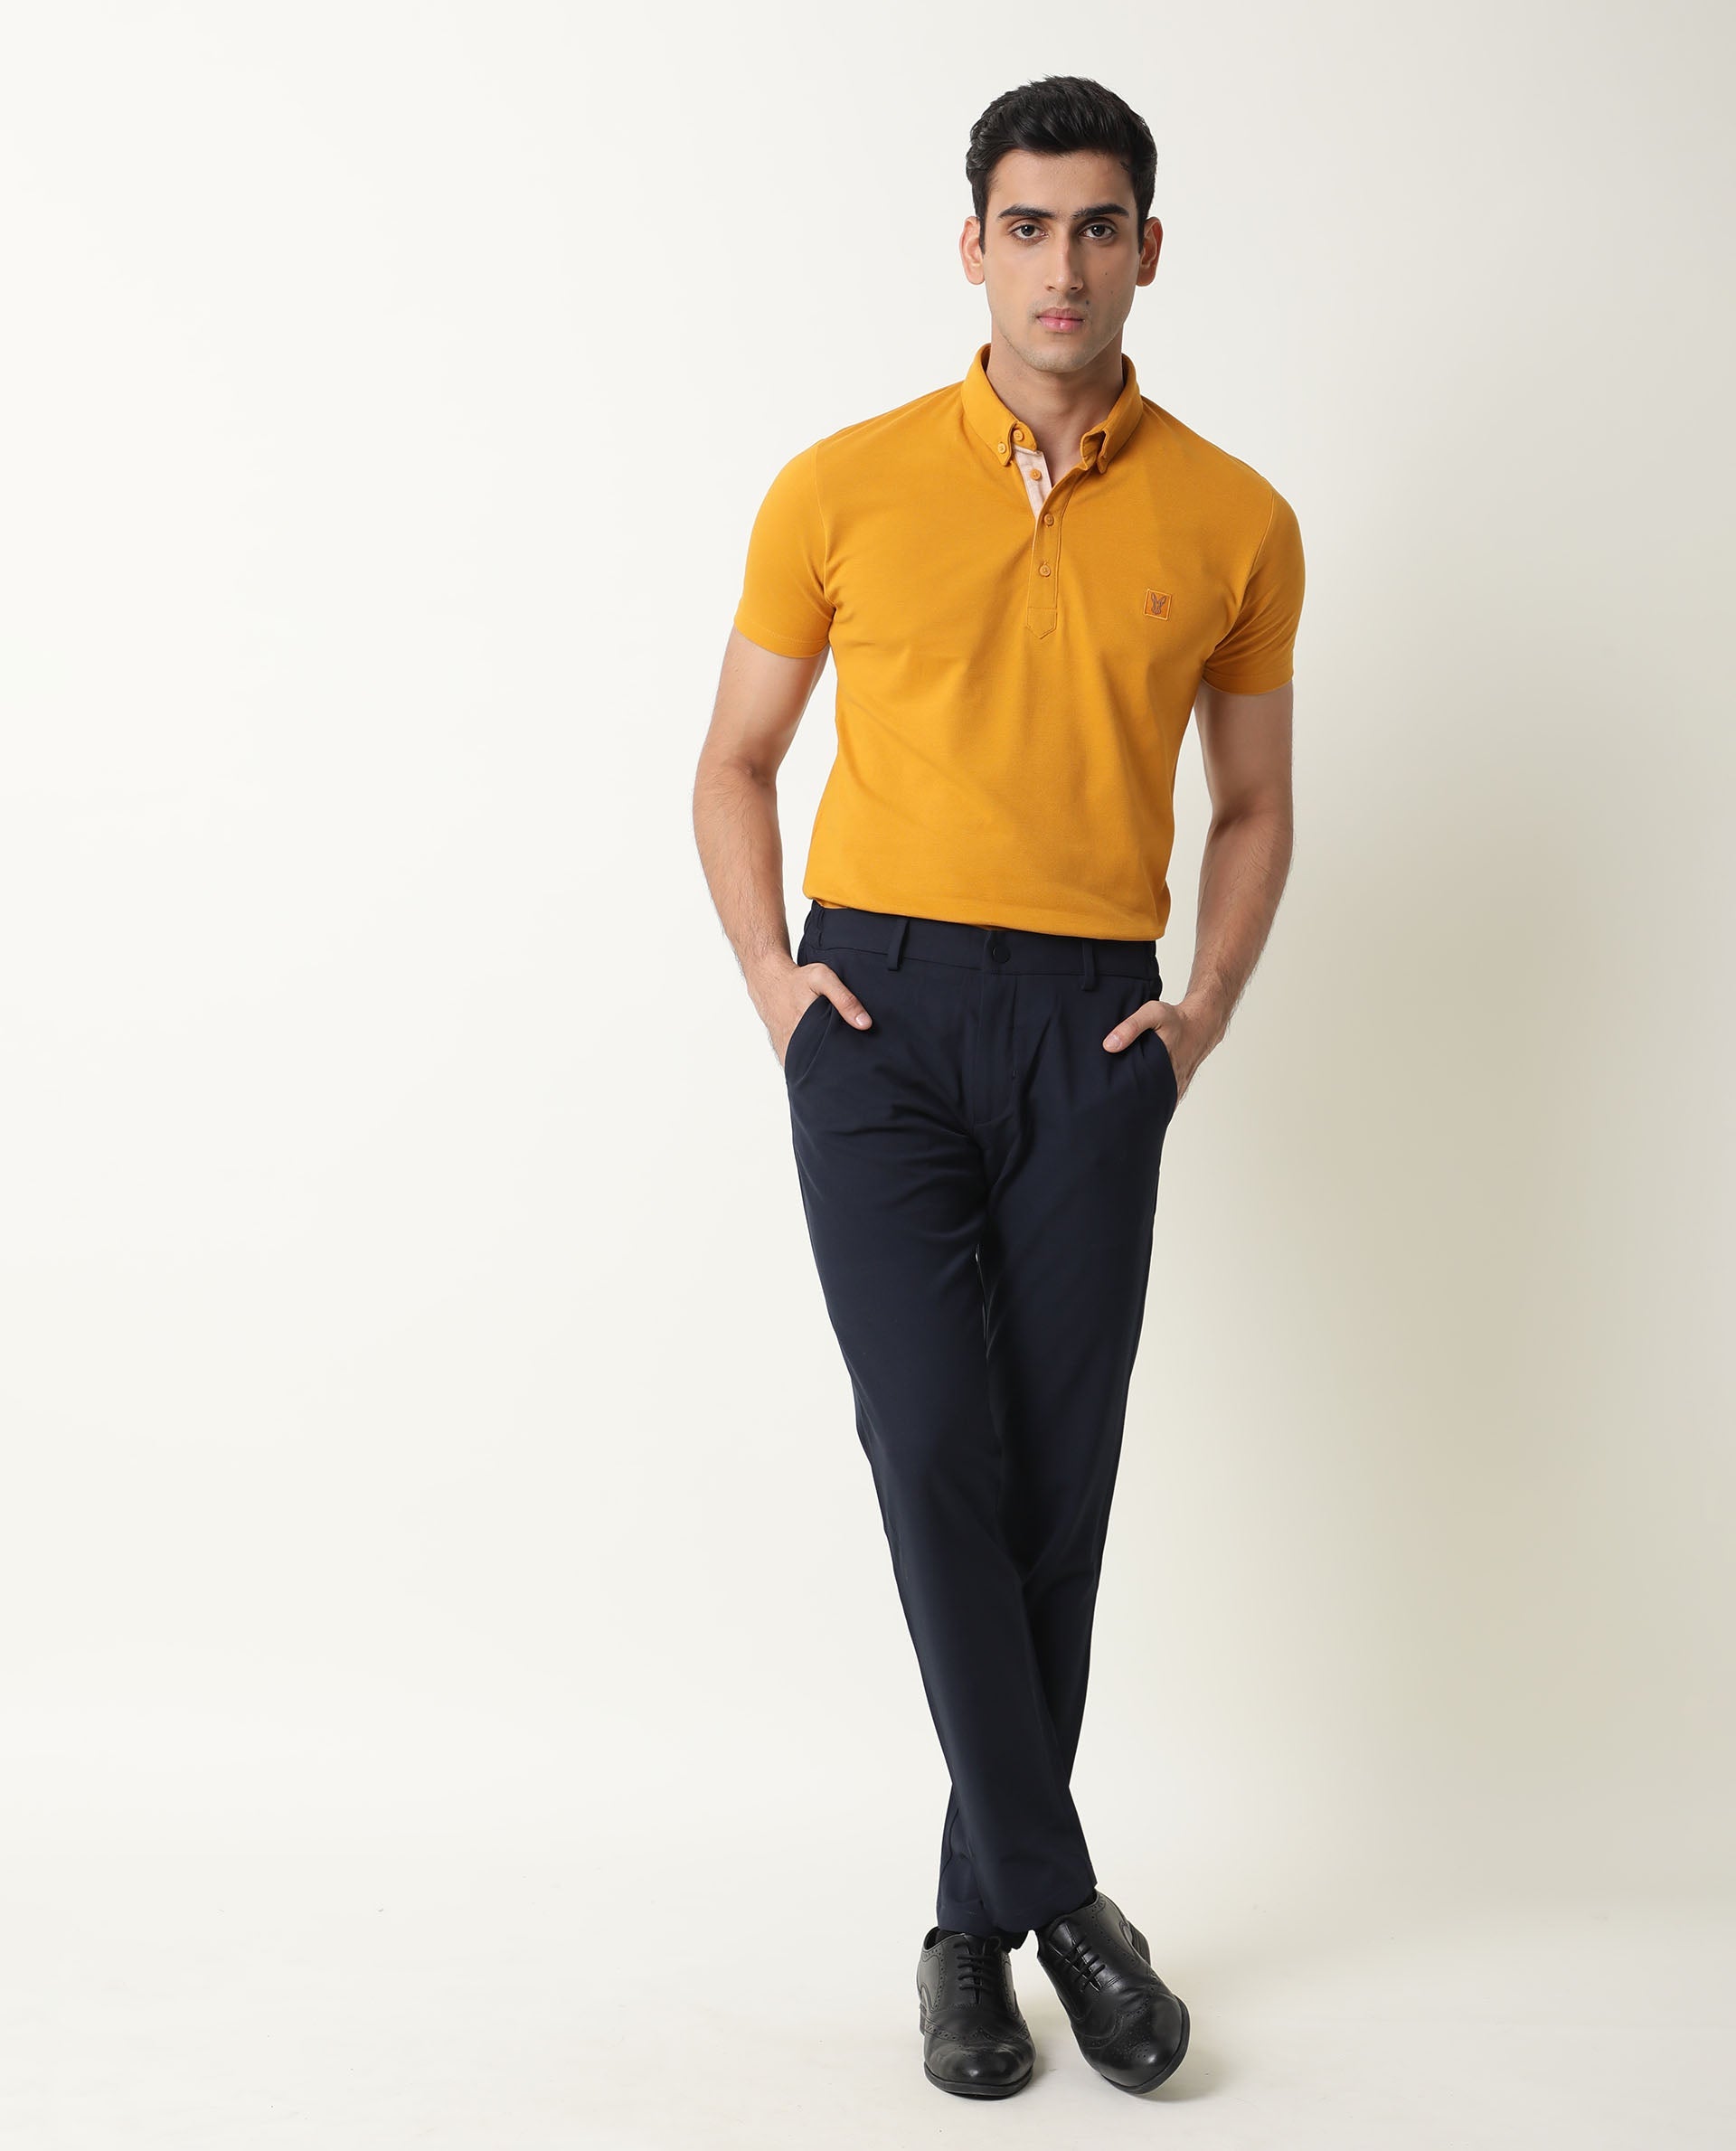 Polo Ralph Lauren Trousers  Buy Polo Ralph Lauren Trousers online in India